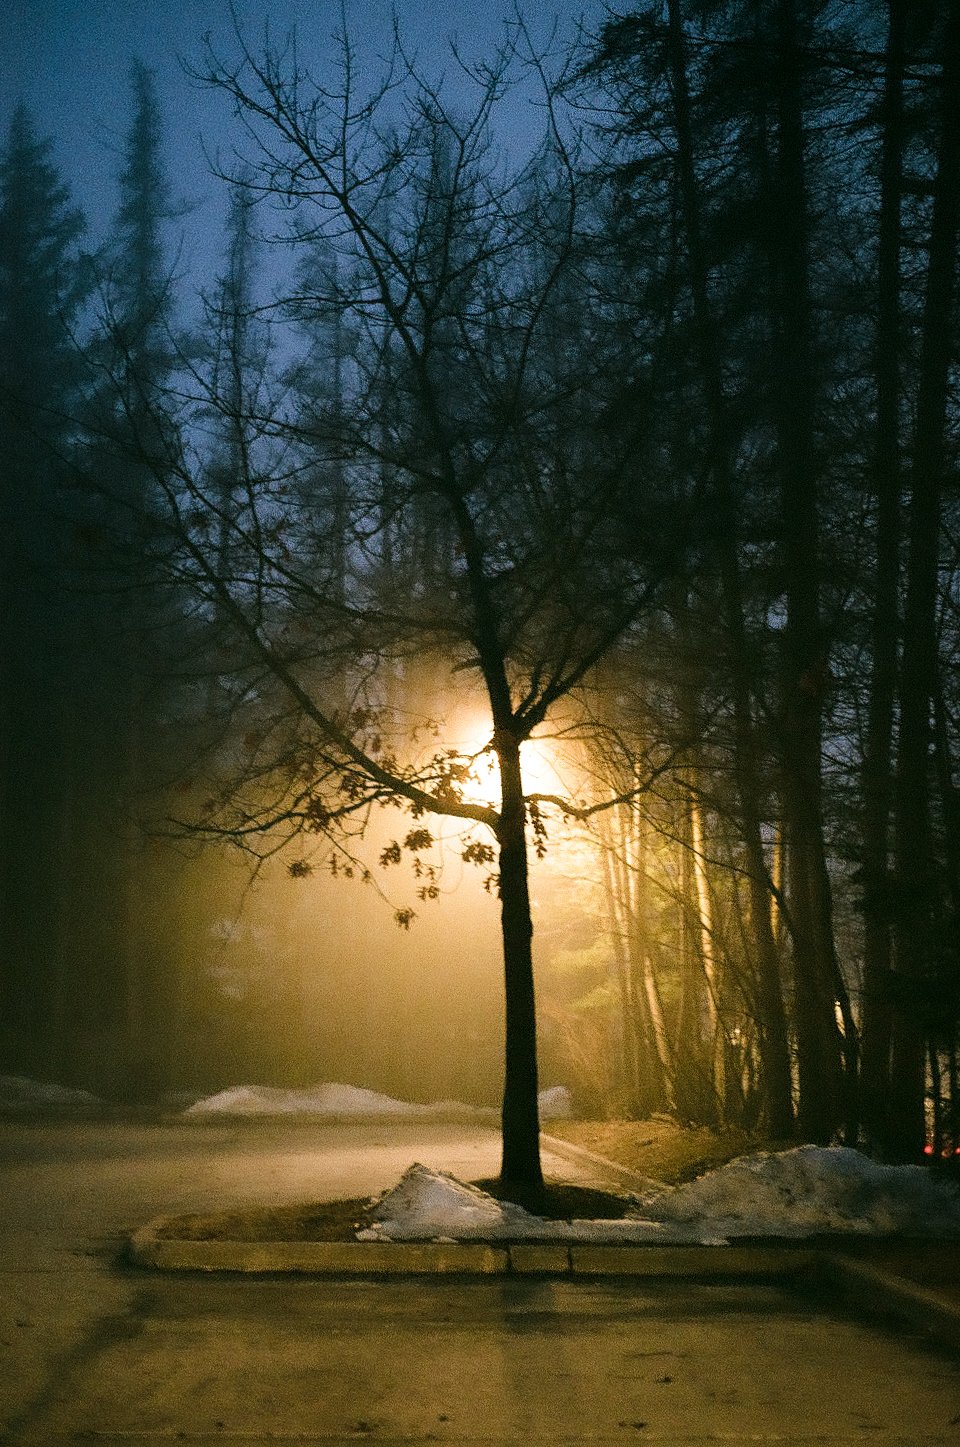  Lonesome tree on a foggy night, Ontario 